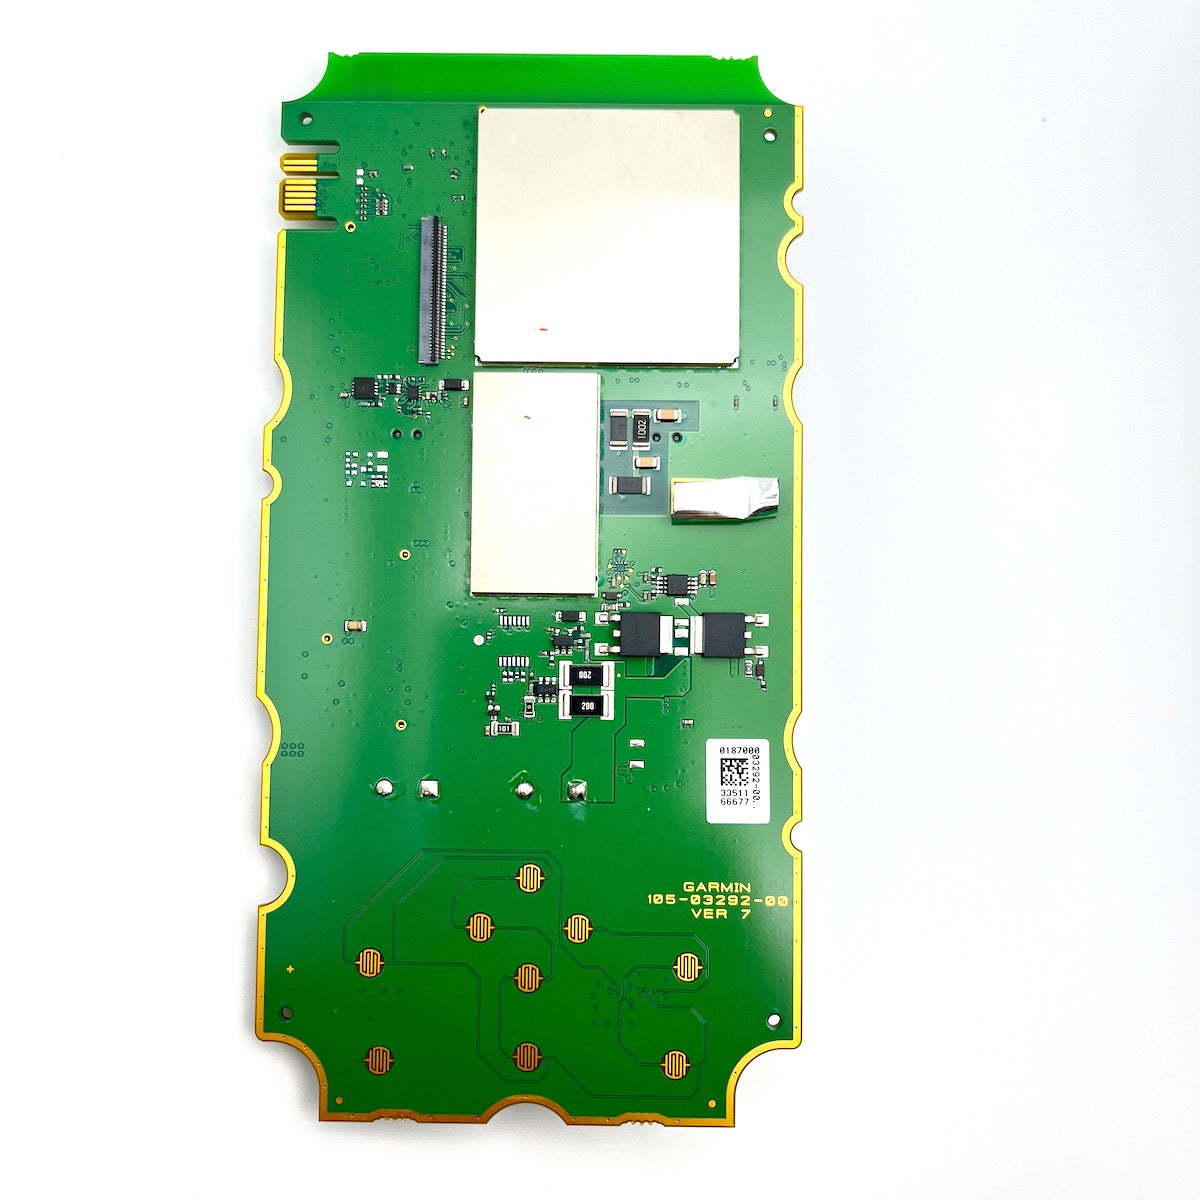 PCB Mainboard for Garmin Striker Plus 4 genuine part repair motherboard plate